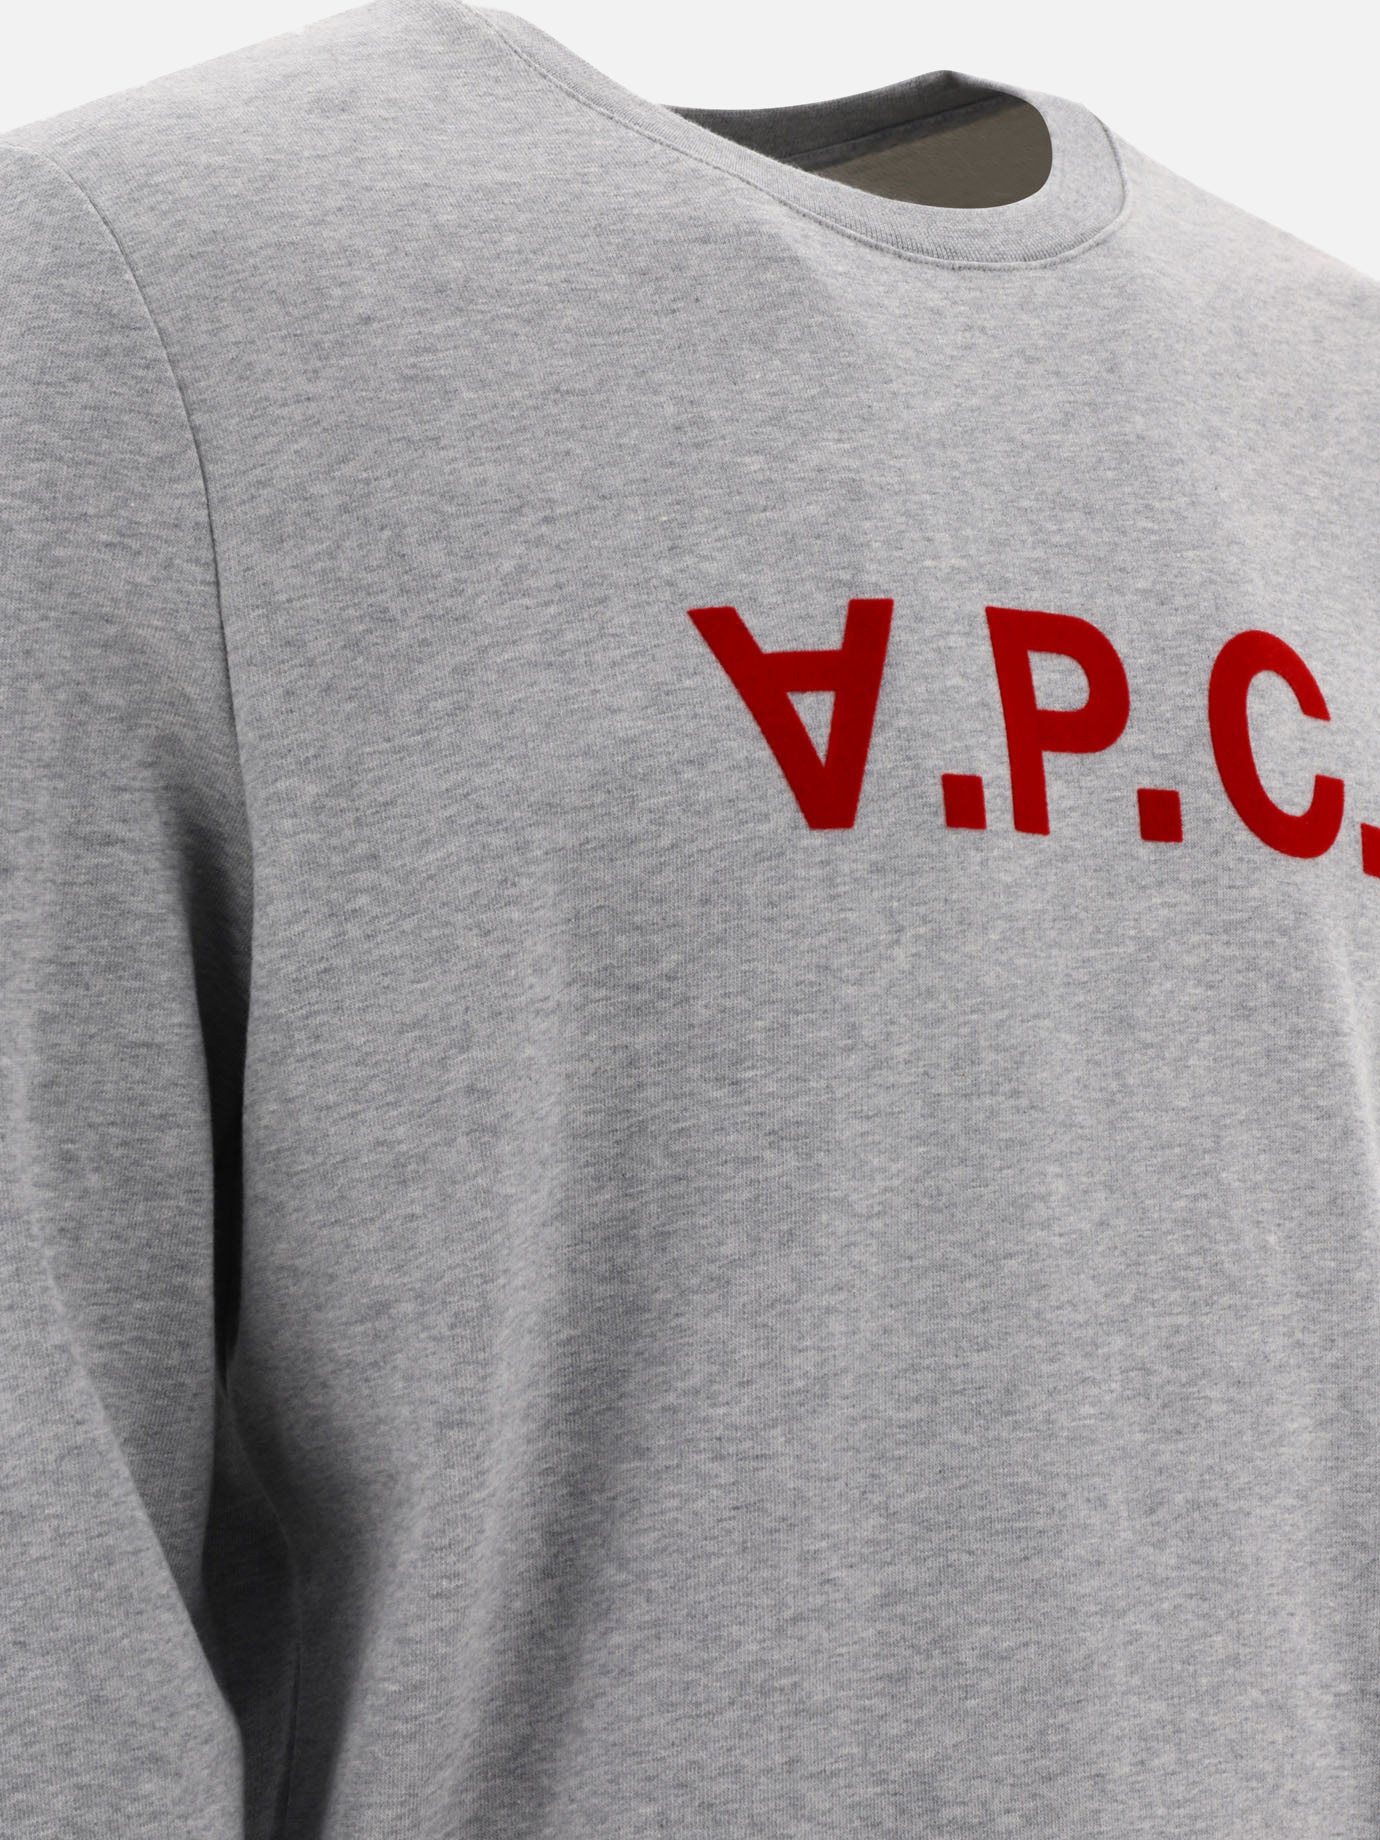 "VPC" sweatshirt